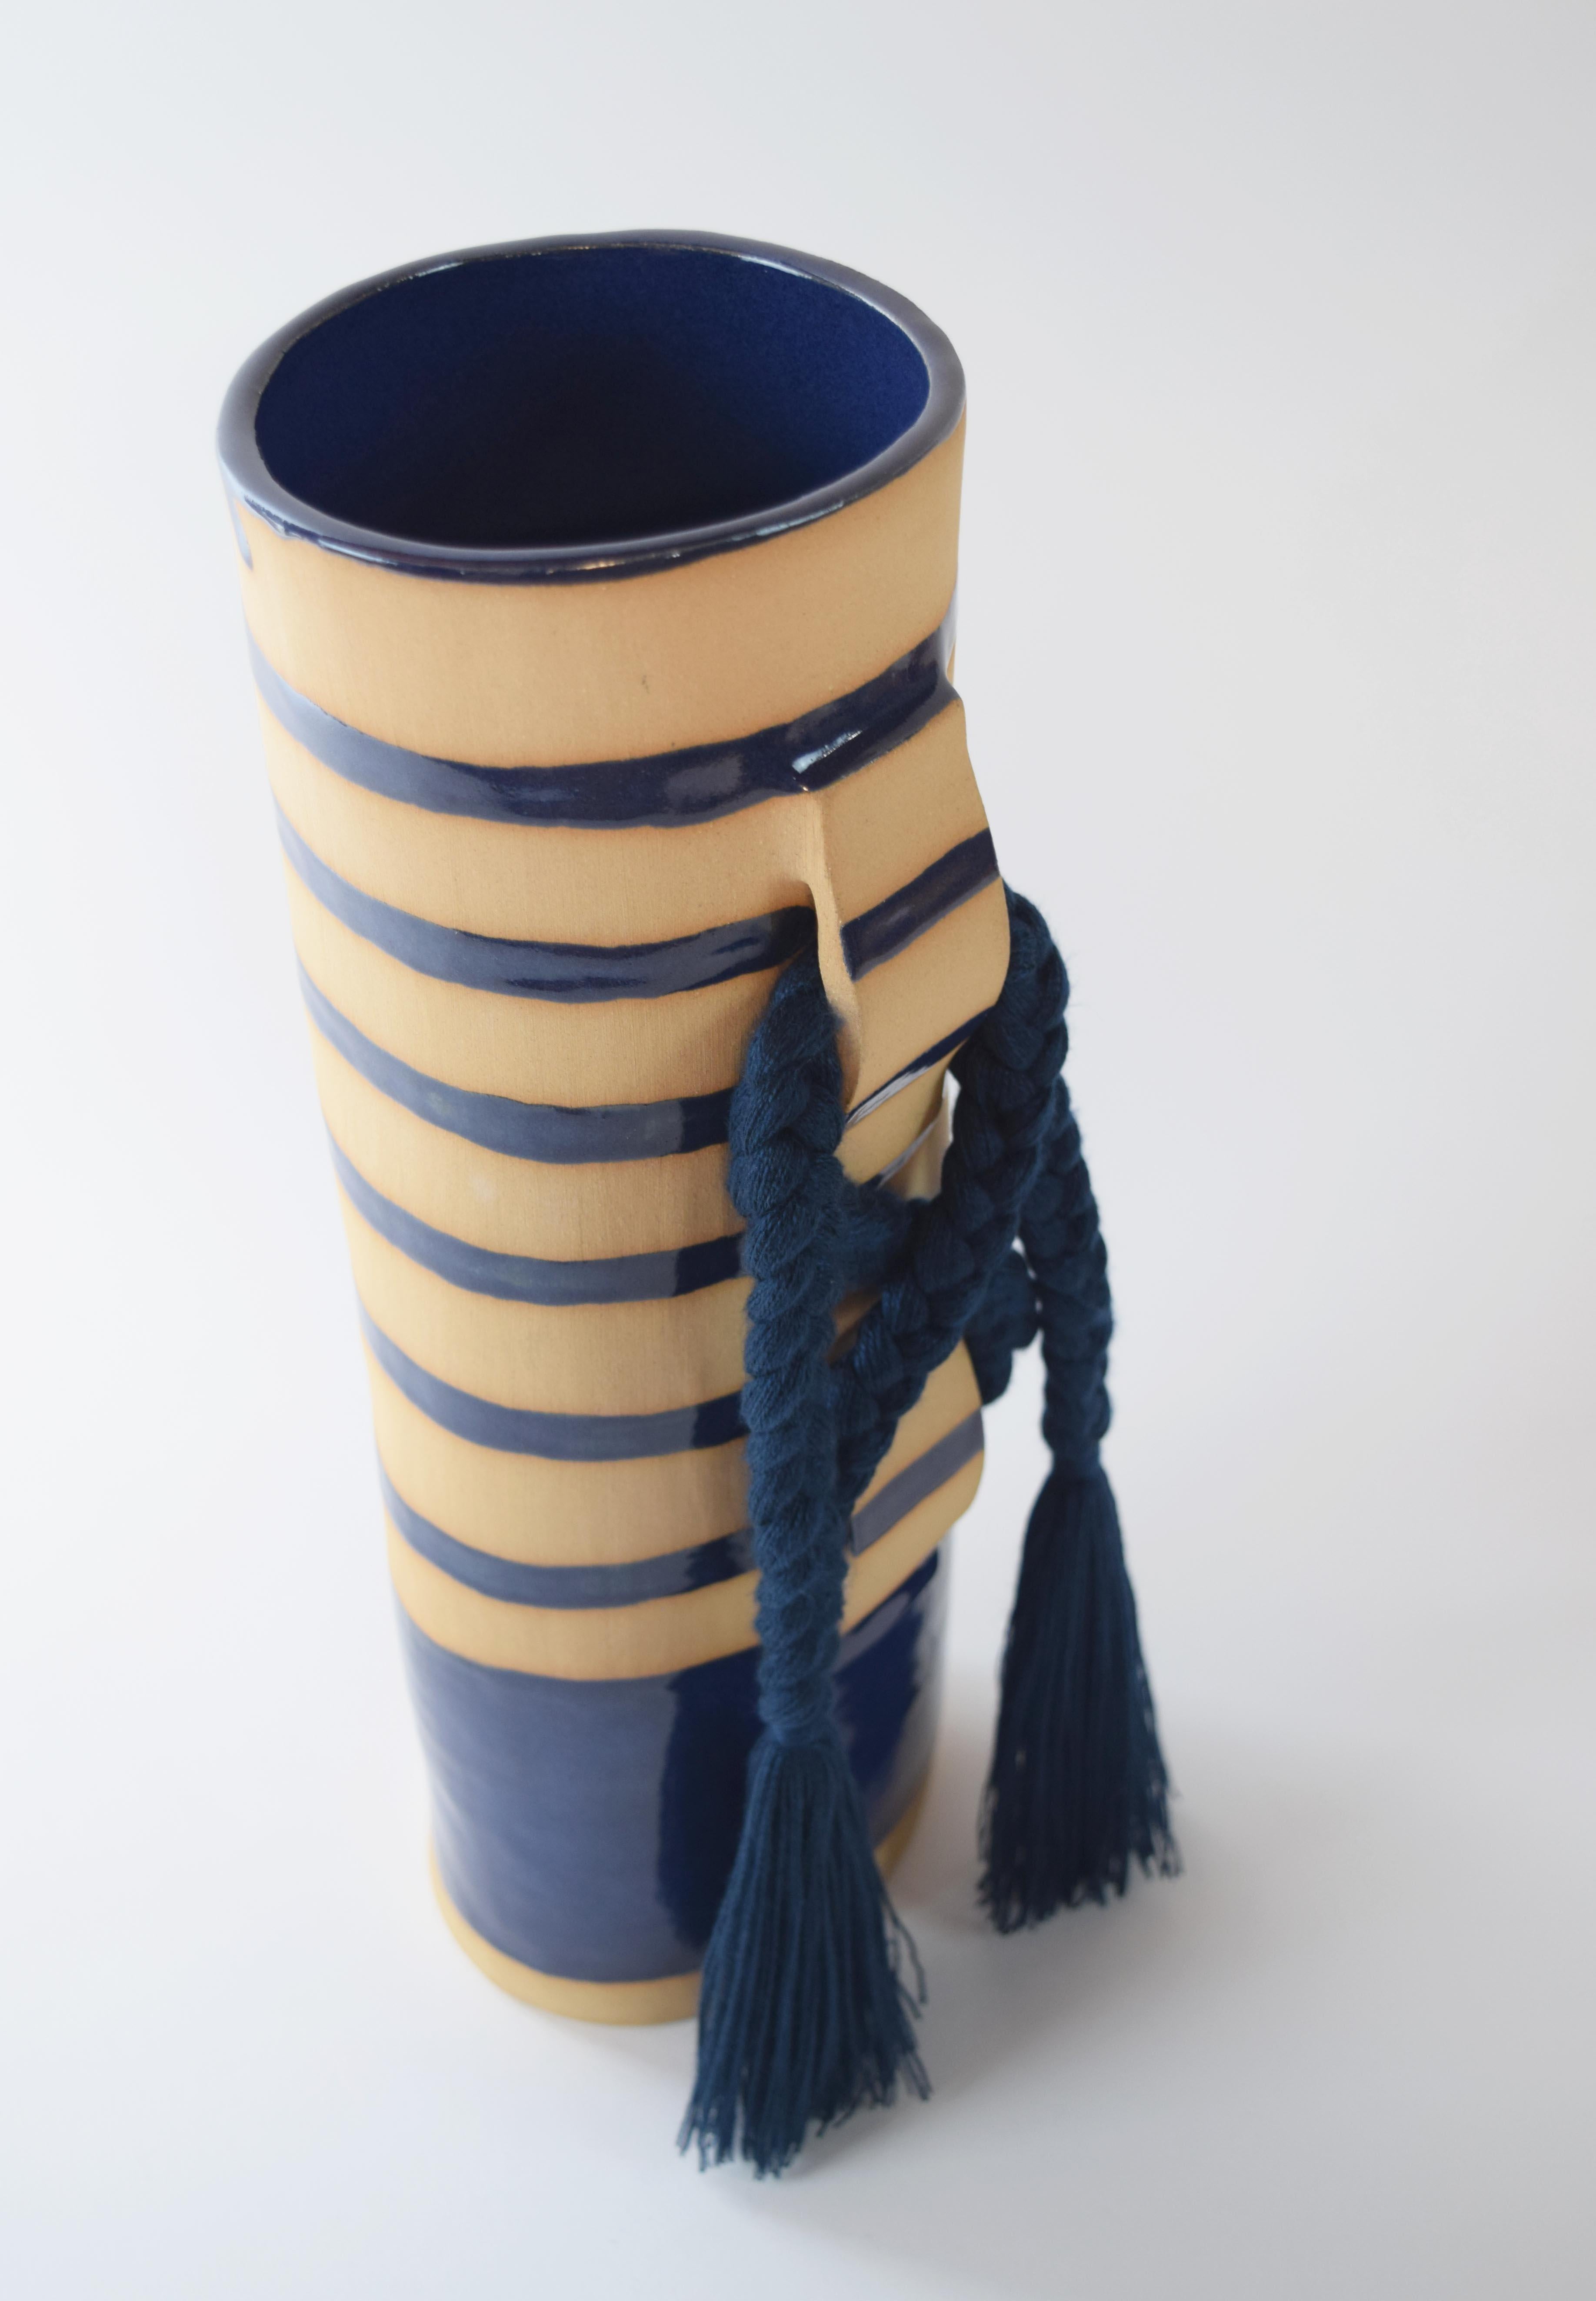 Organic Modern Limited Edition Handmade Ceramic Vase #696, Blue Hand Painted Stripes with Braid